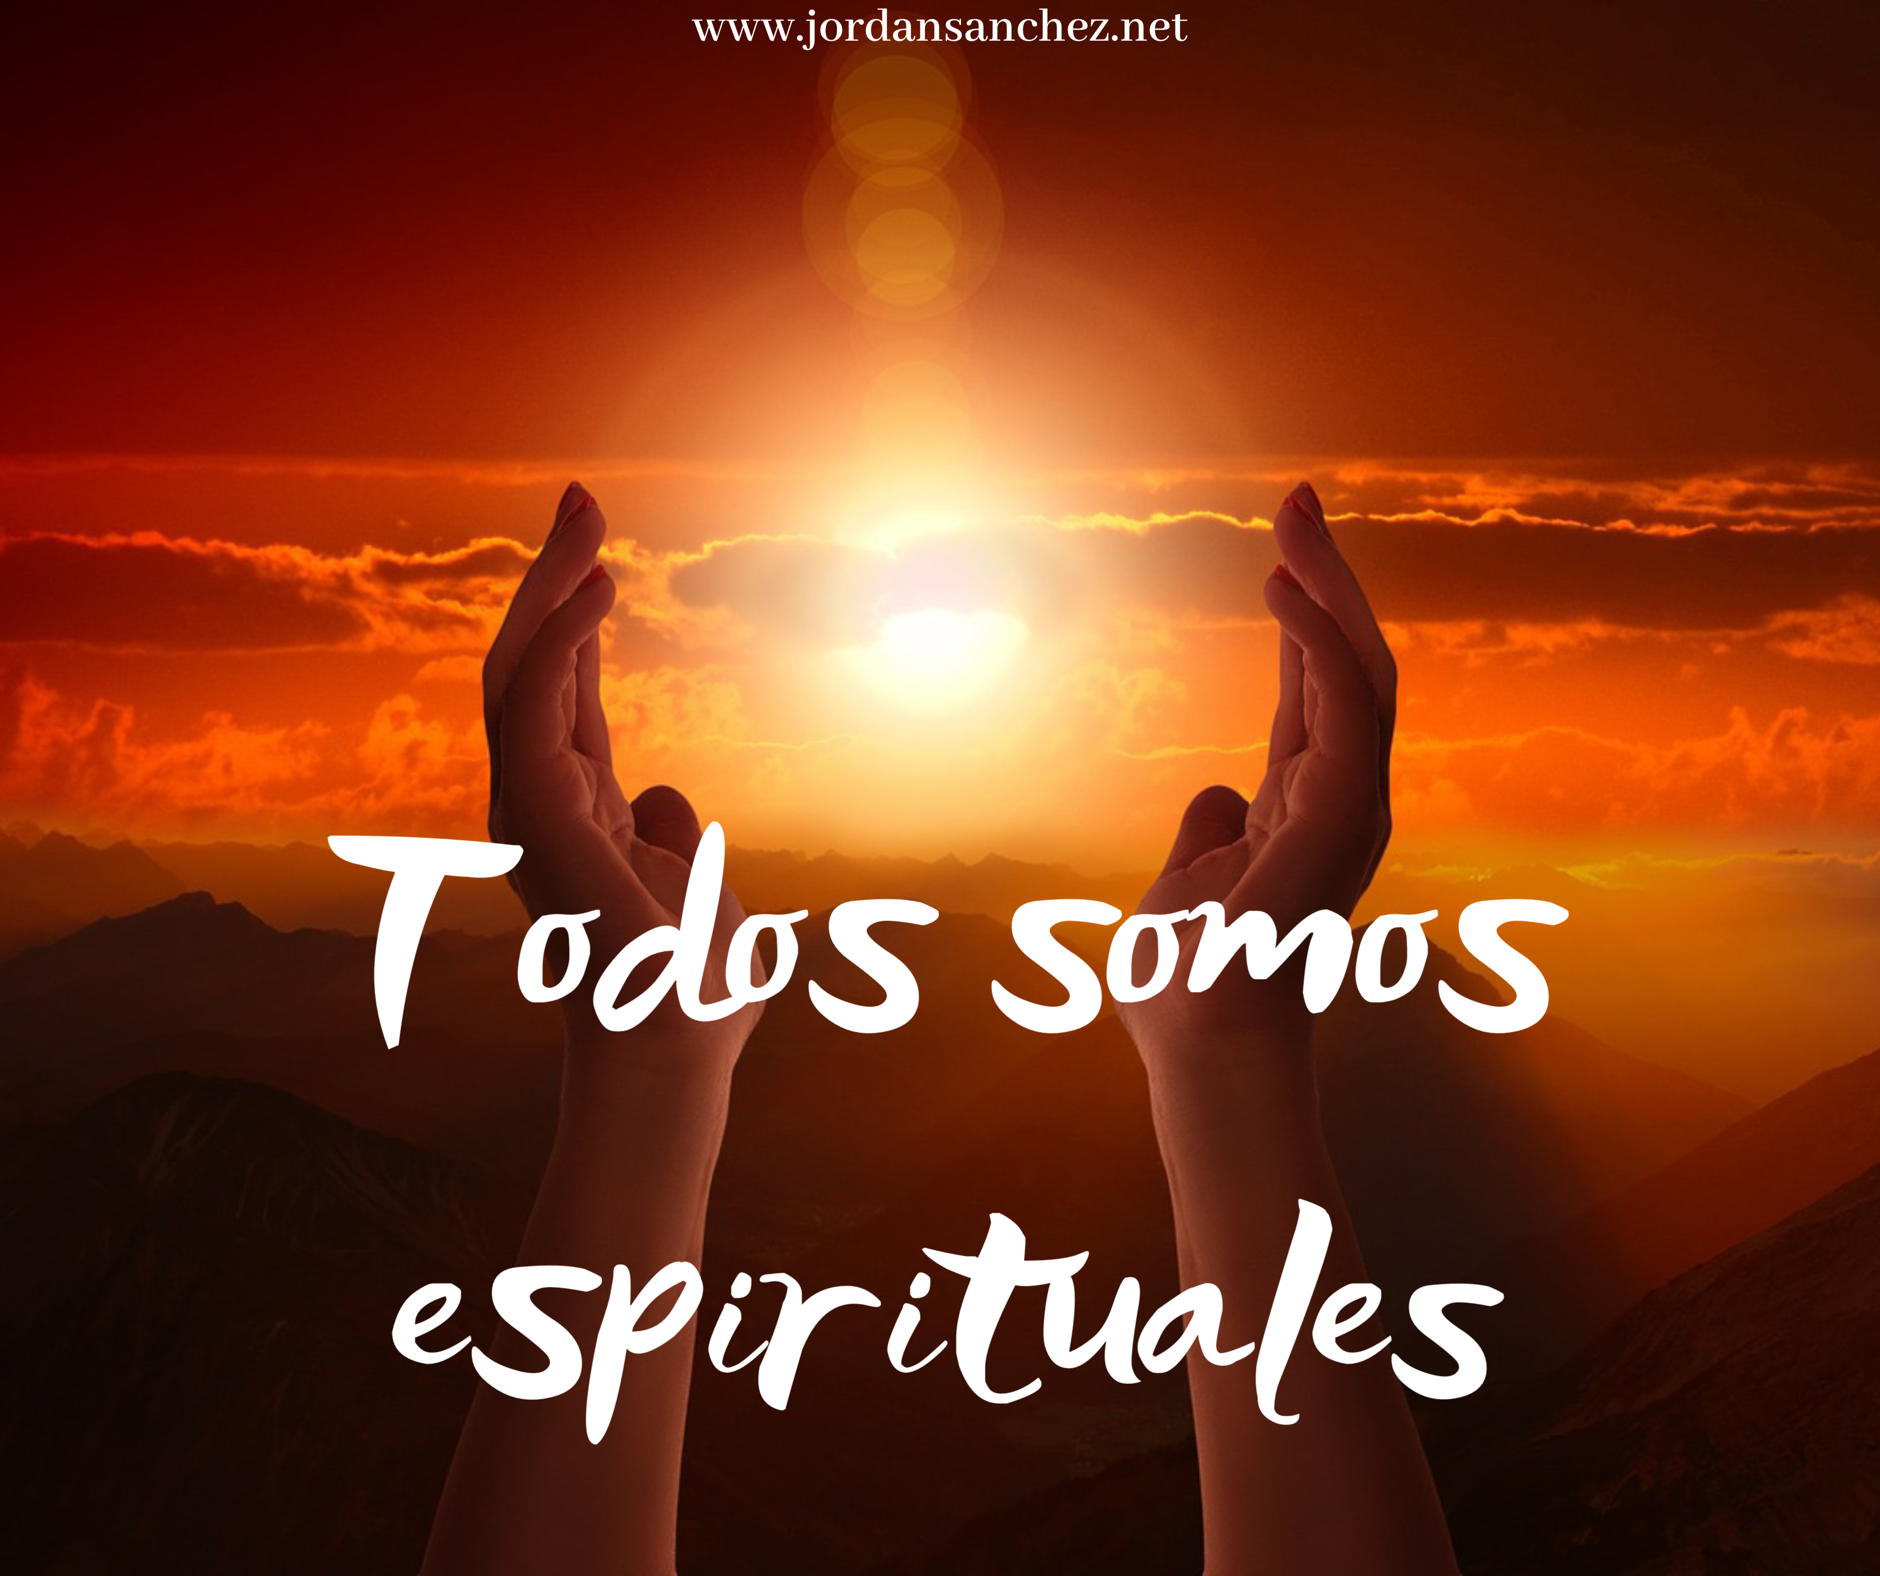 Todos somos espirituales.